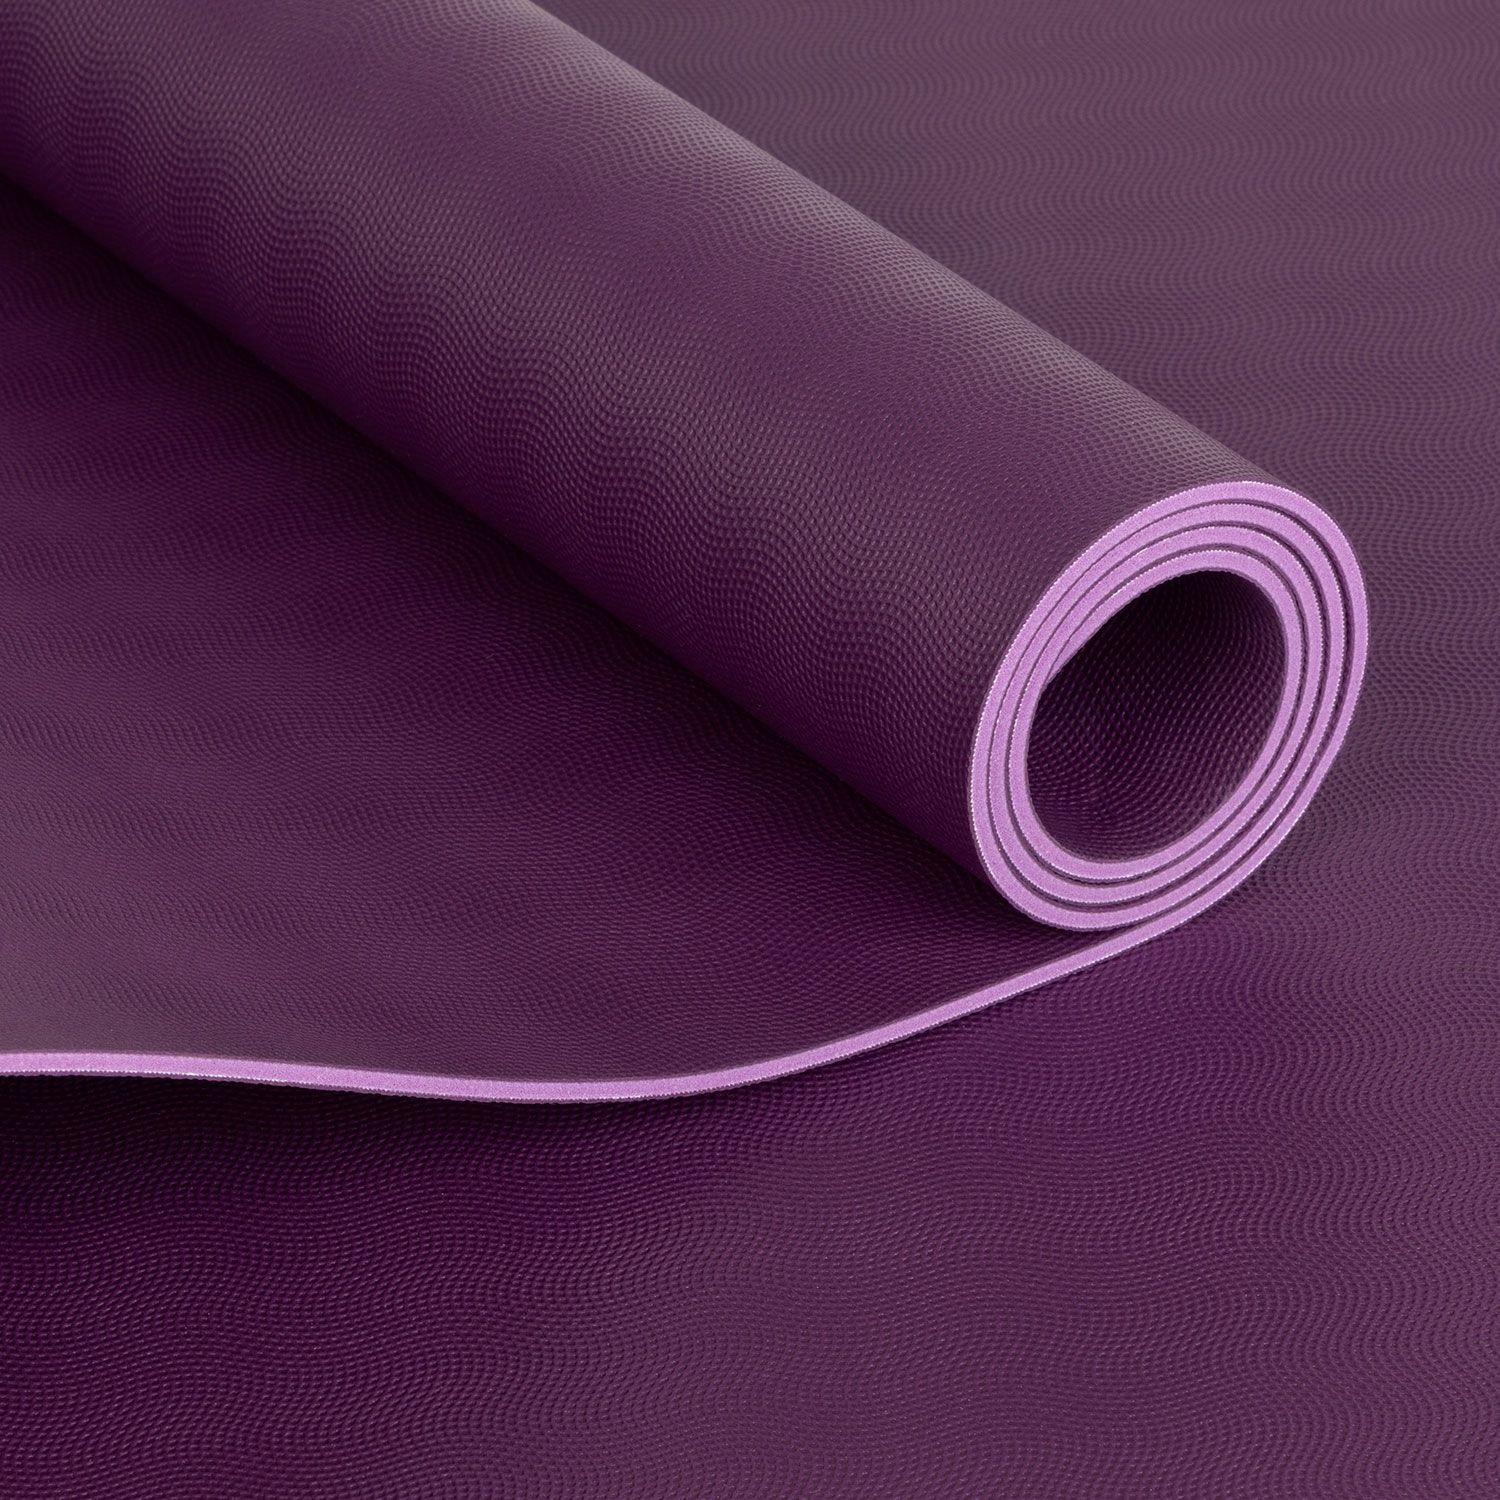 Yogamatte EcoPro, violett